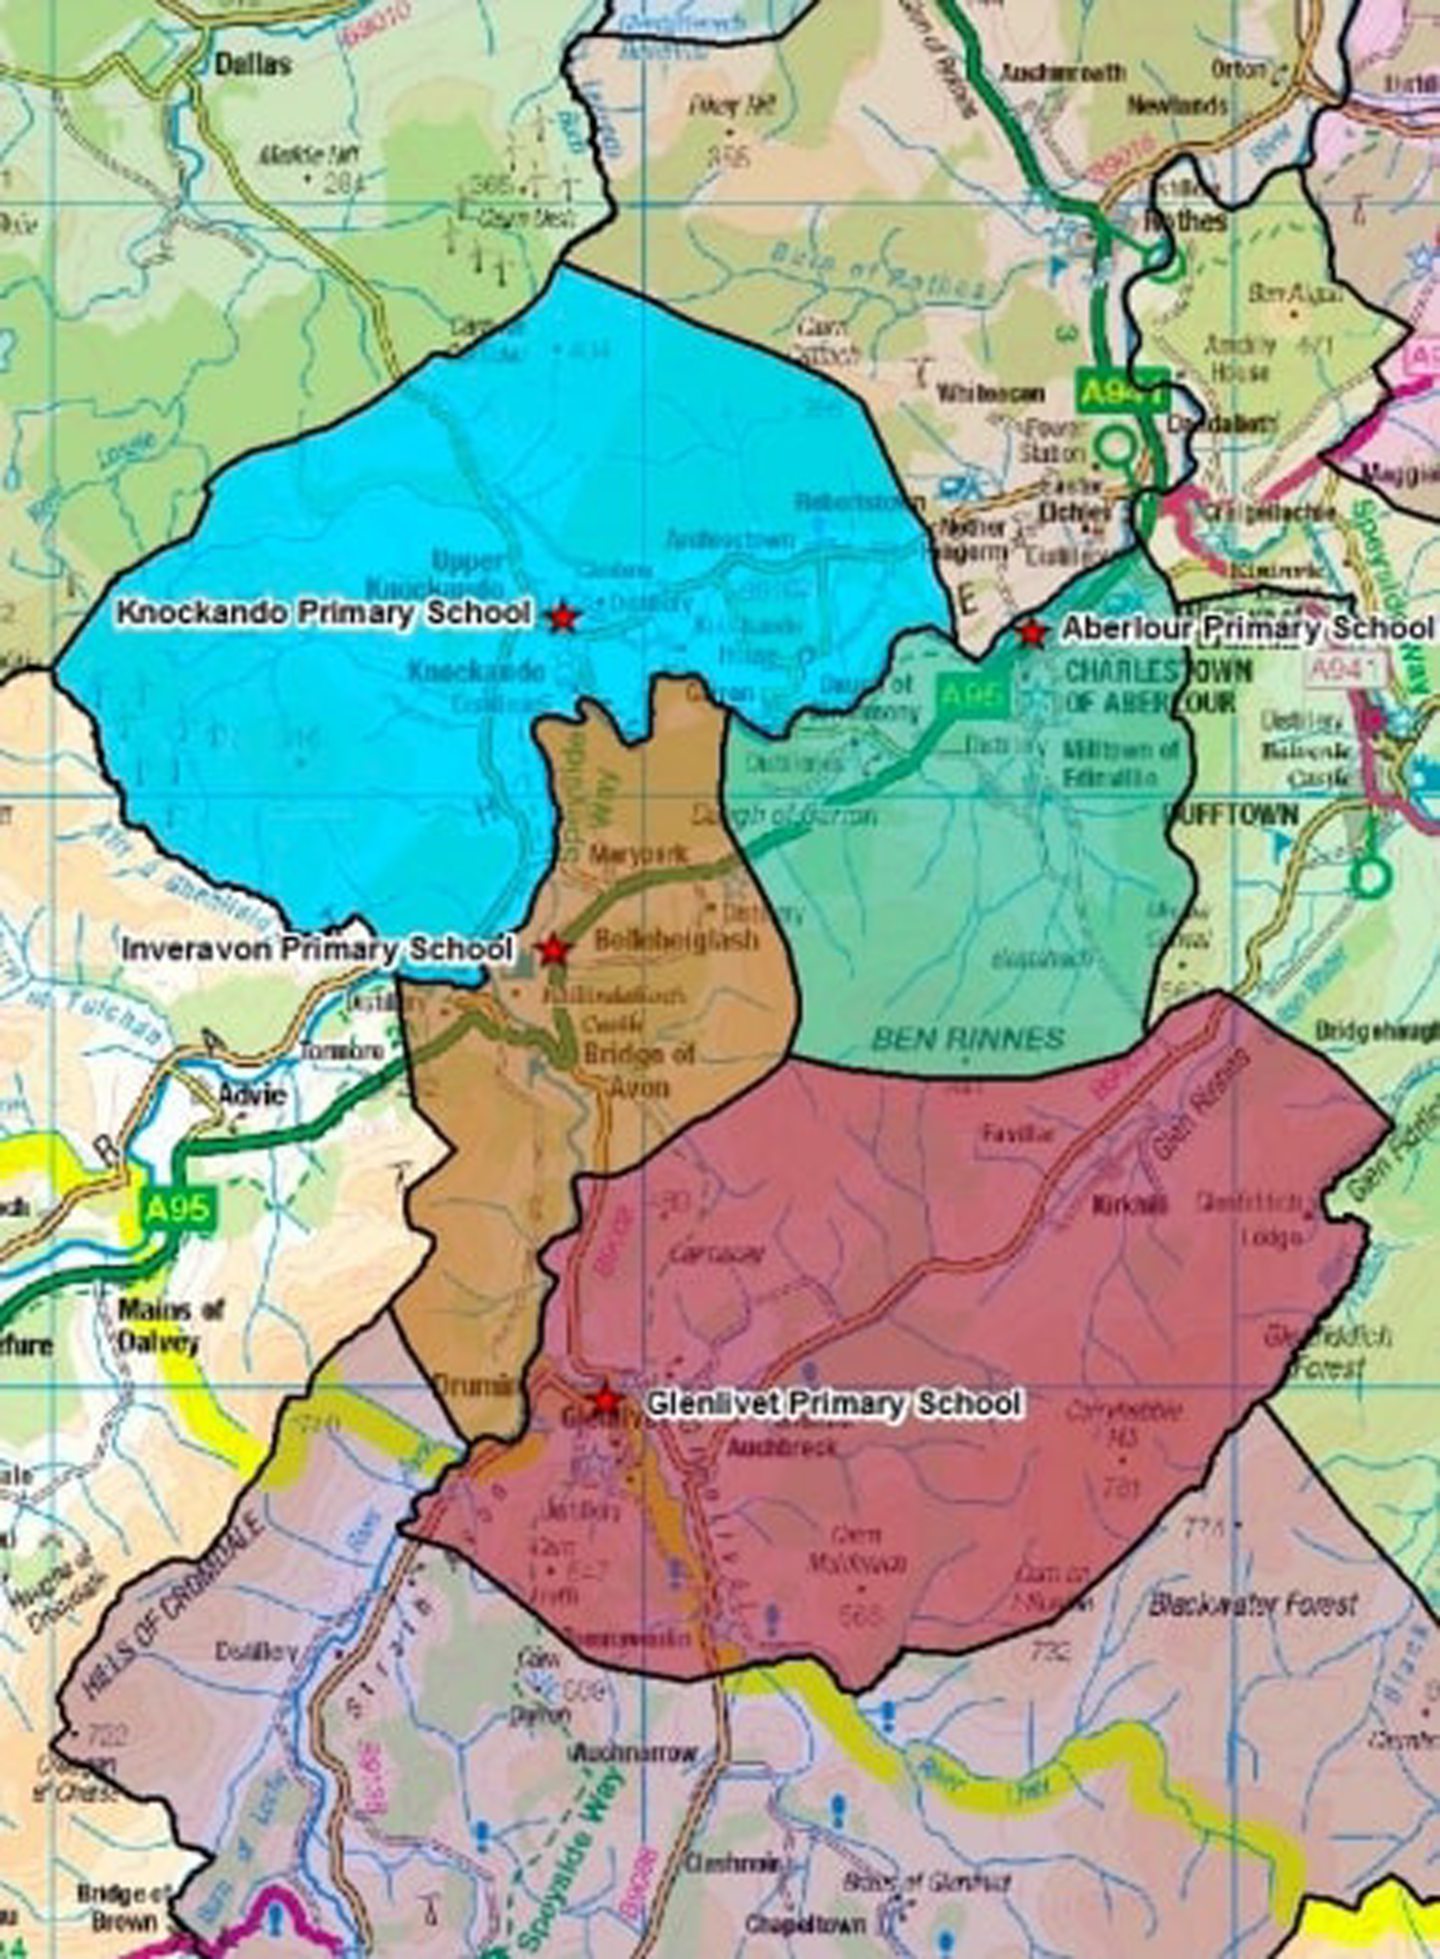 A map of the catchment areas for Inveravon, Knockando, Glenlivet and Aberlour Primary Schools.